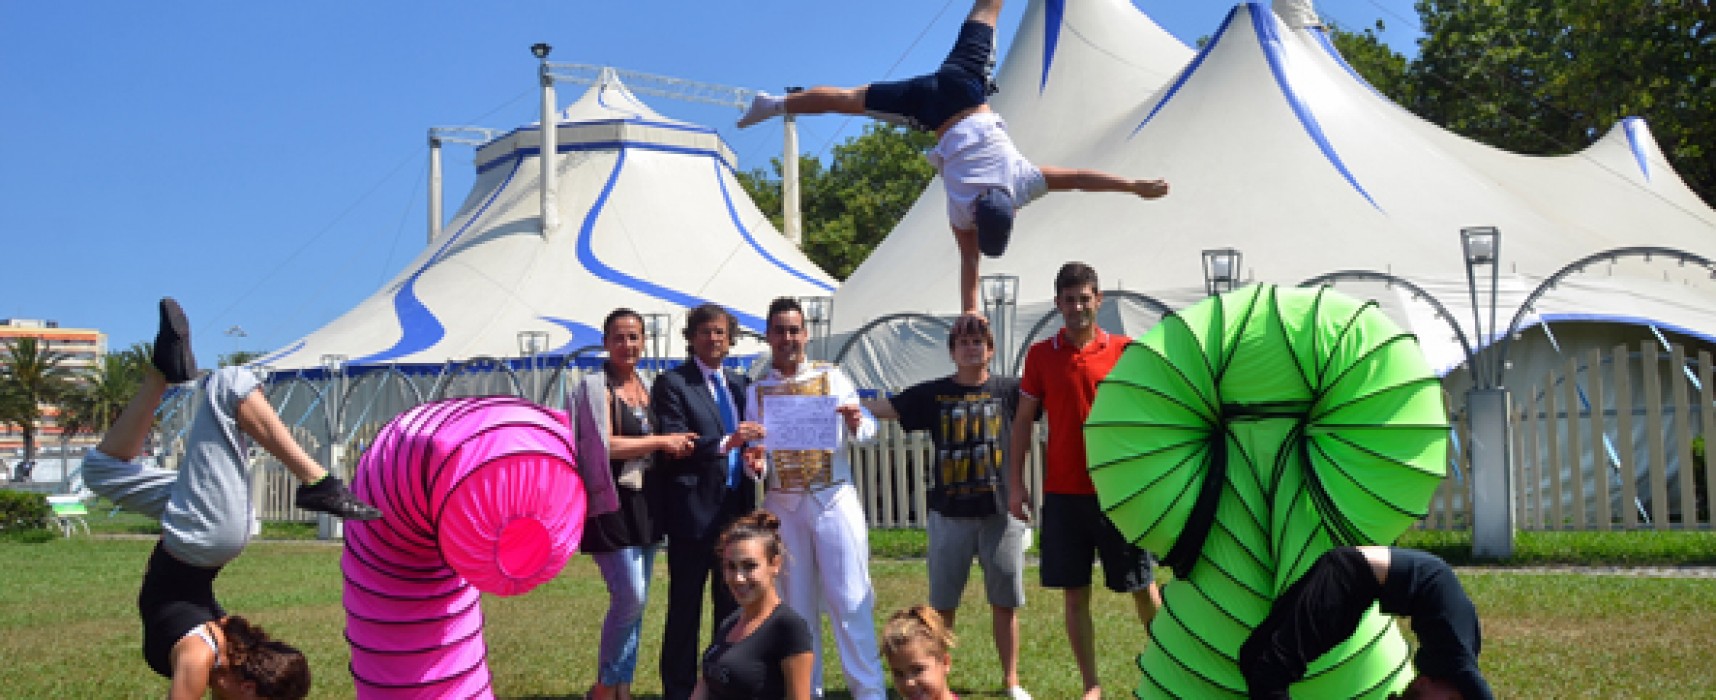 Circo Quimera entrega 3.000 euros al programa santanderino «Apadrina una familia»